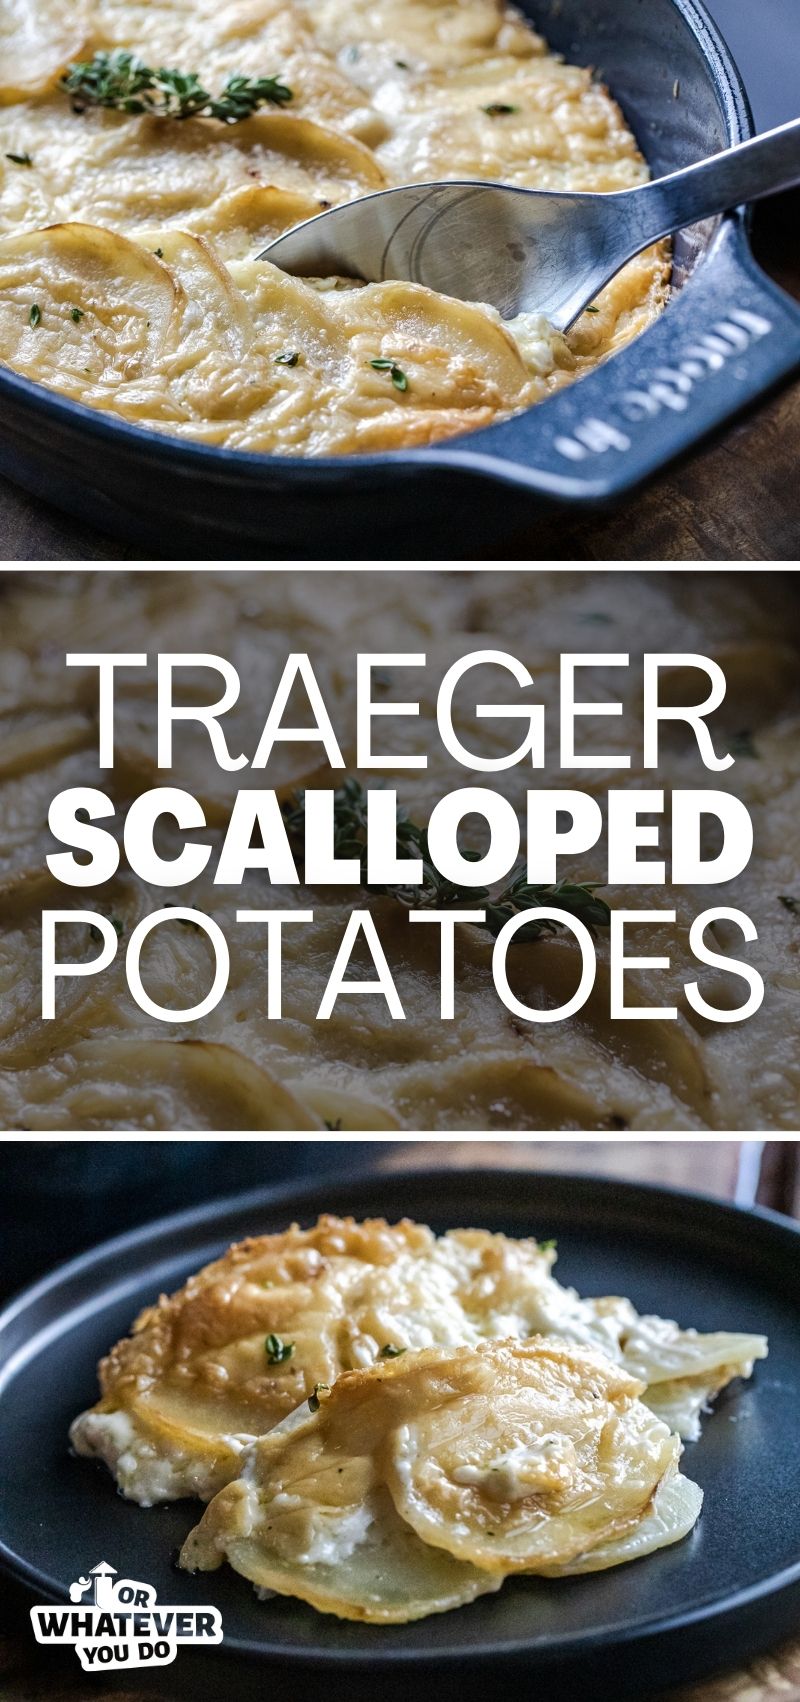 Traeger Scalloped Potatoes